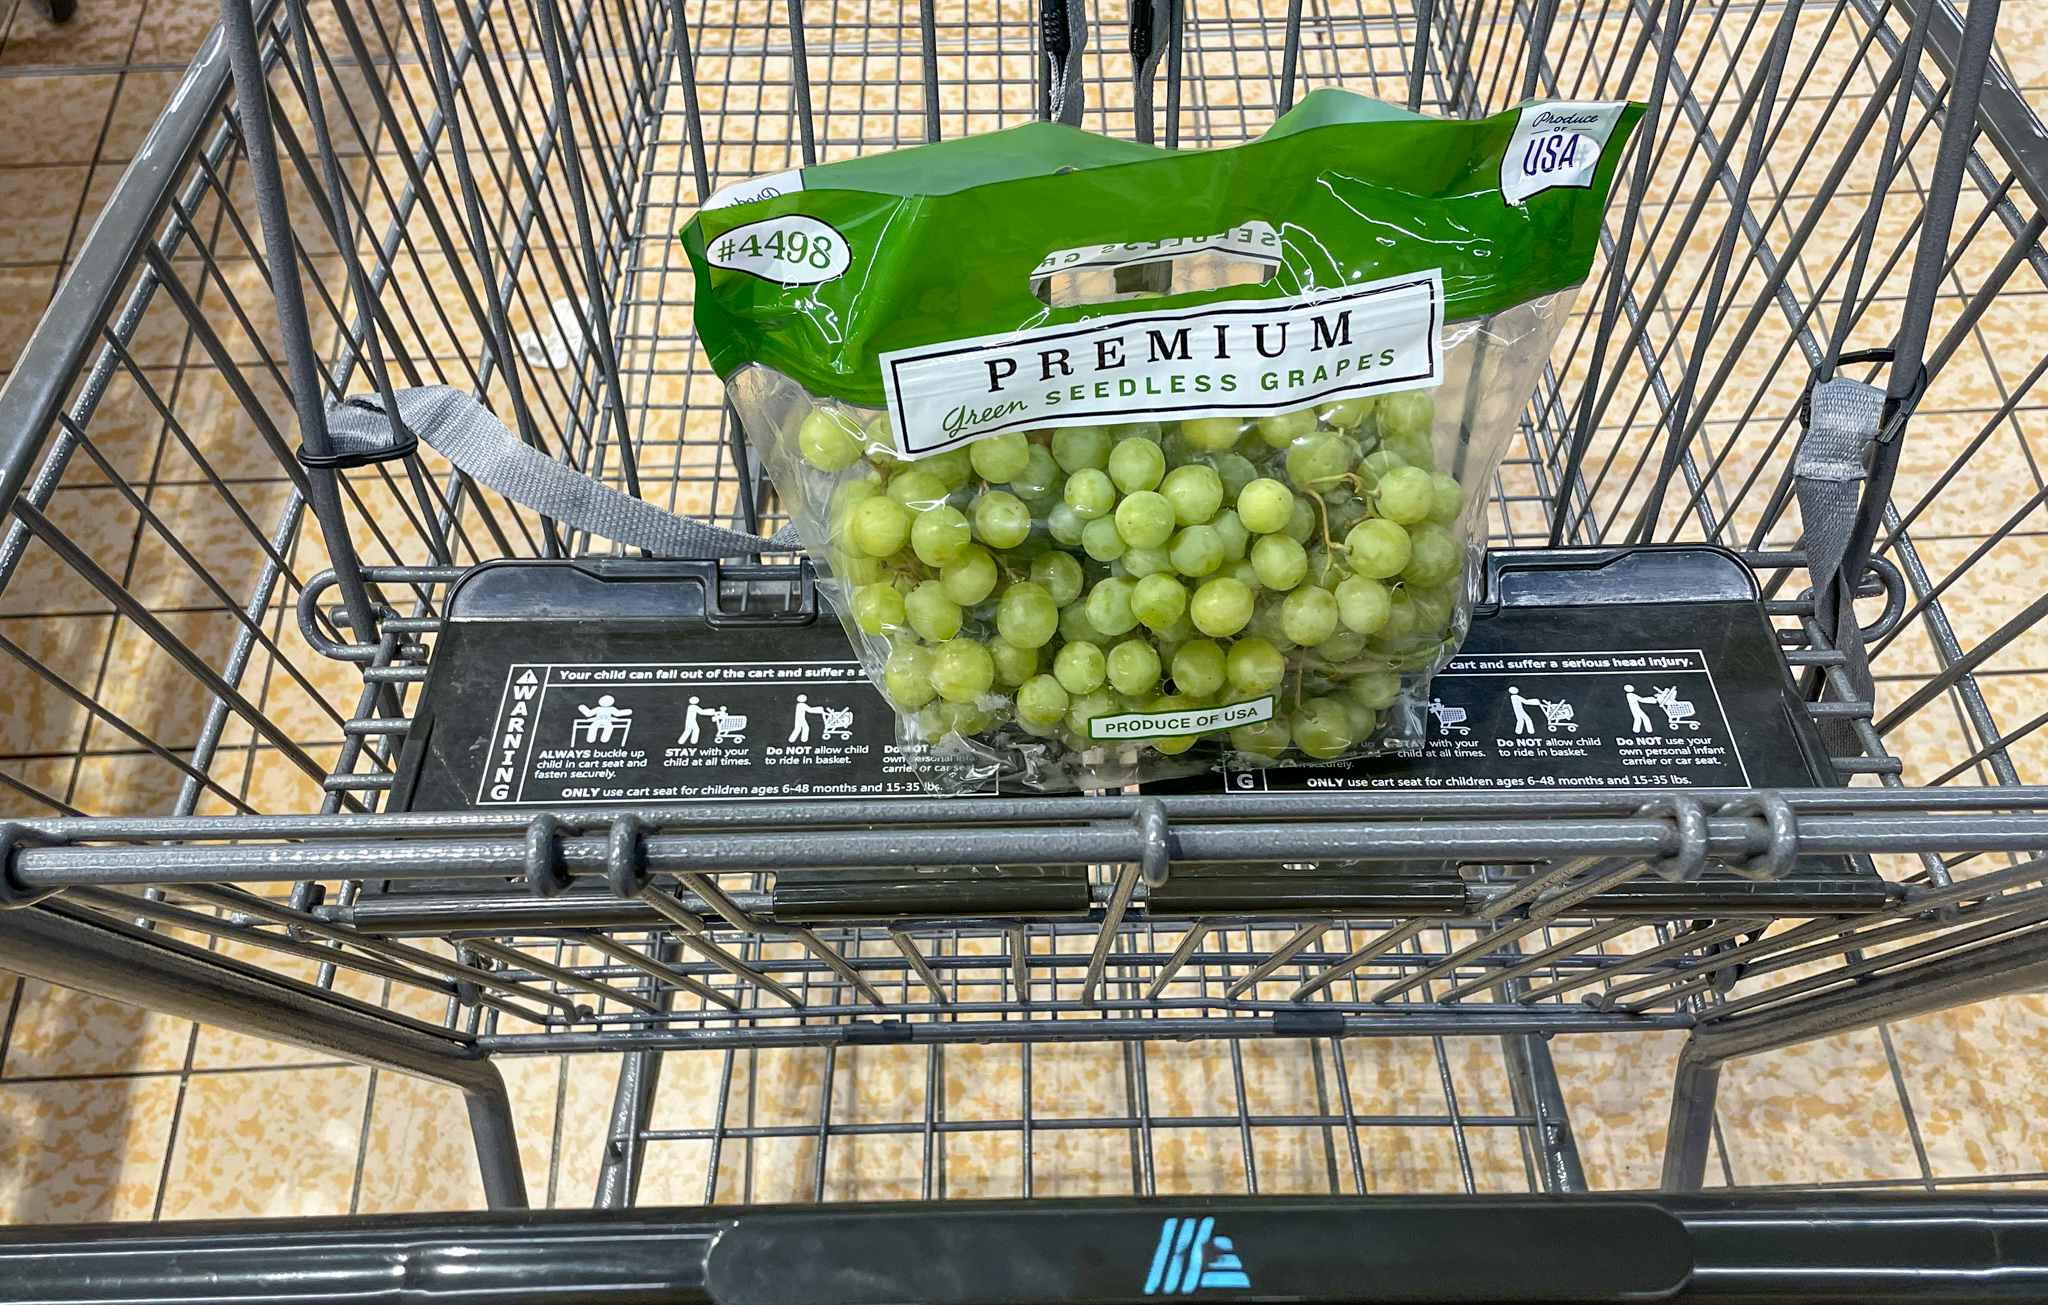 green grapes in a cart at aldi